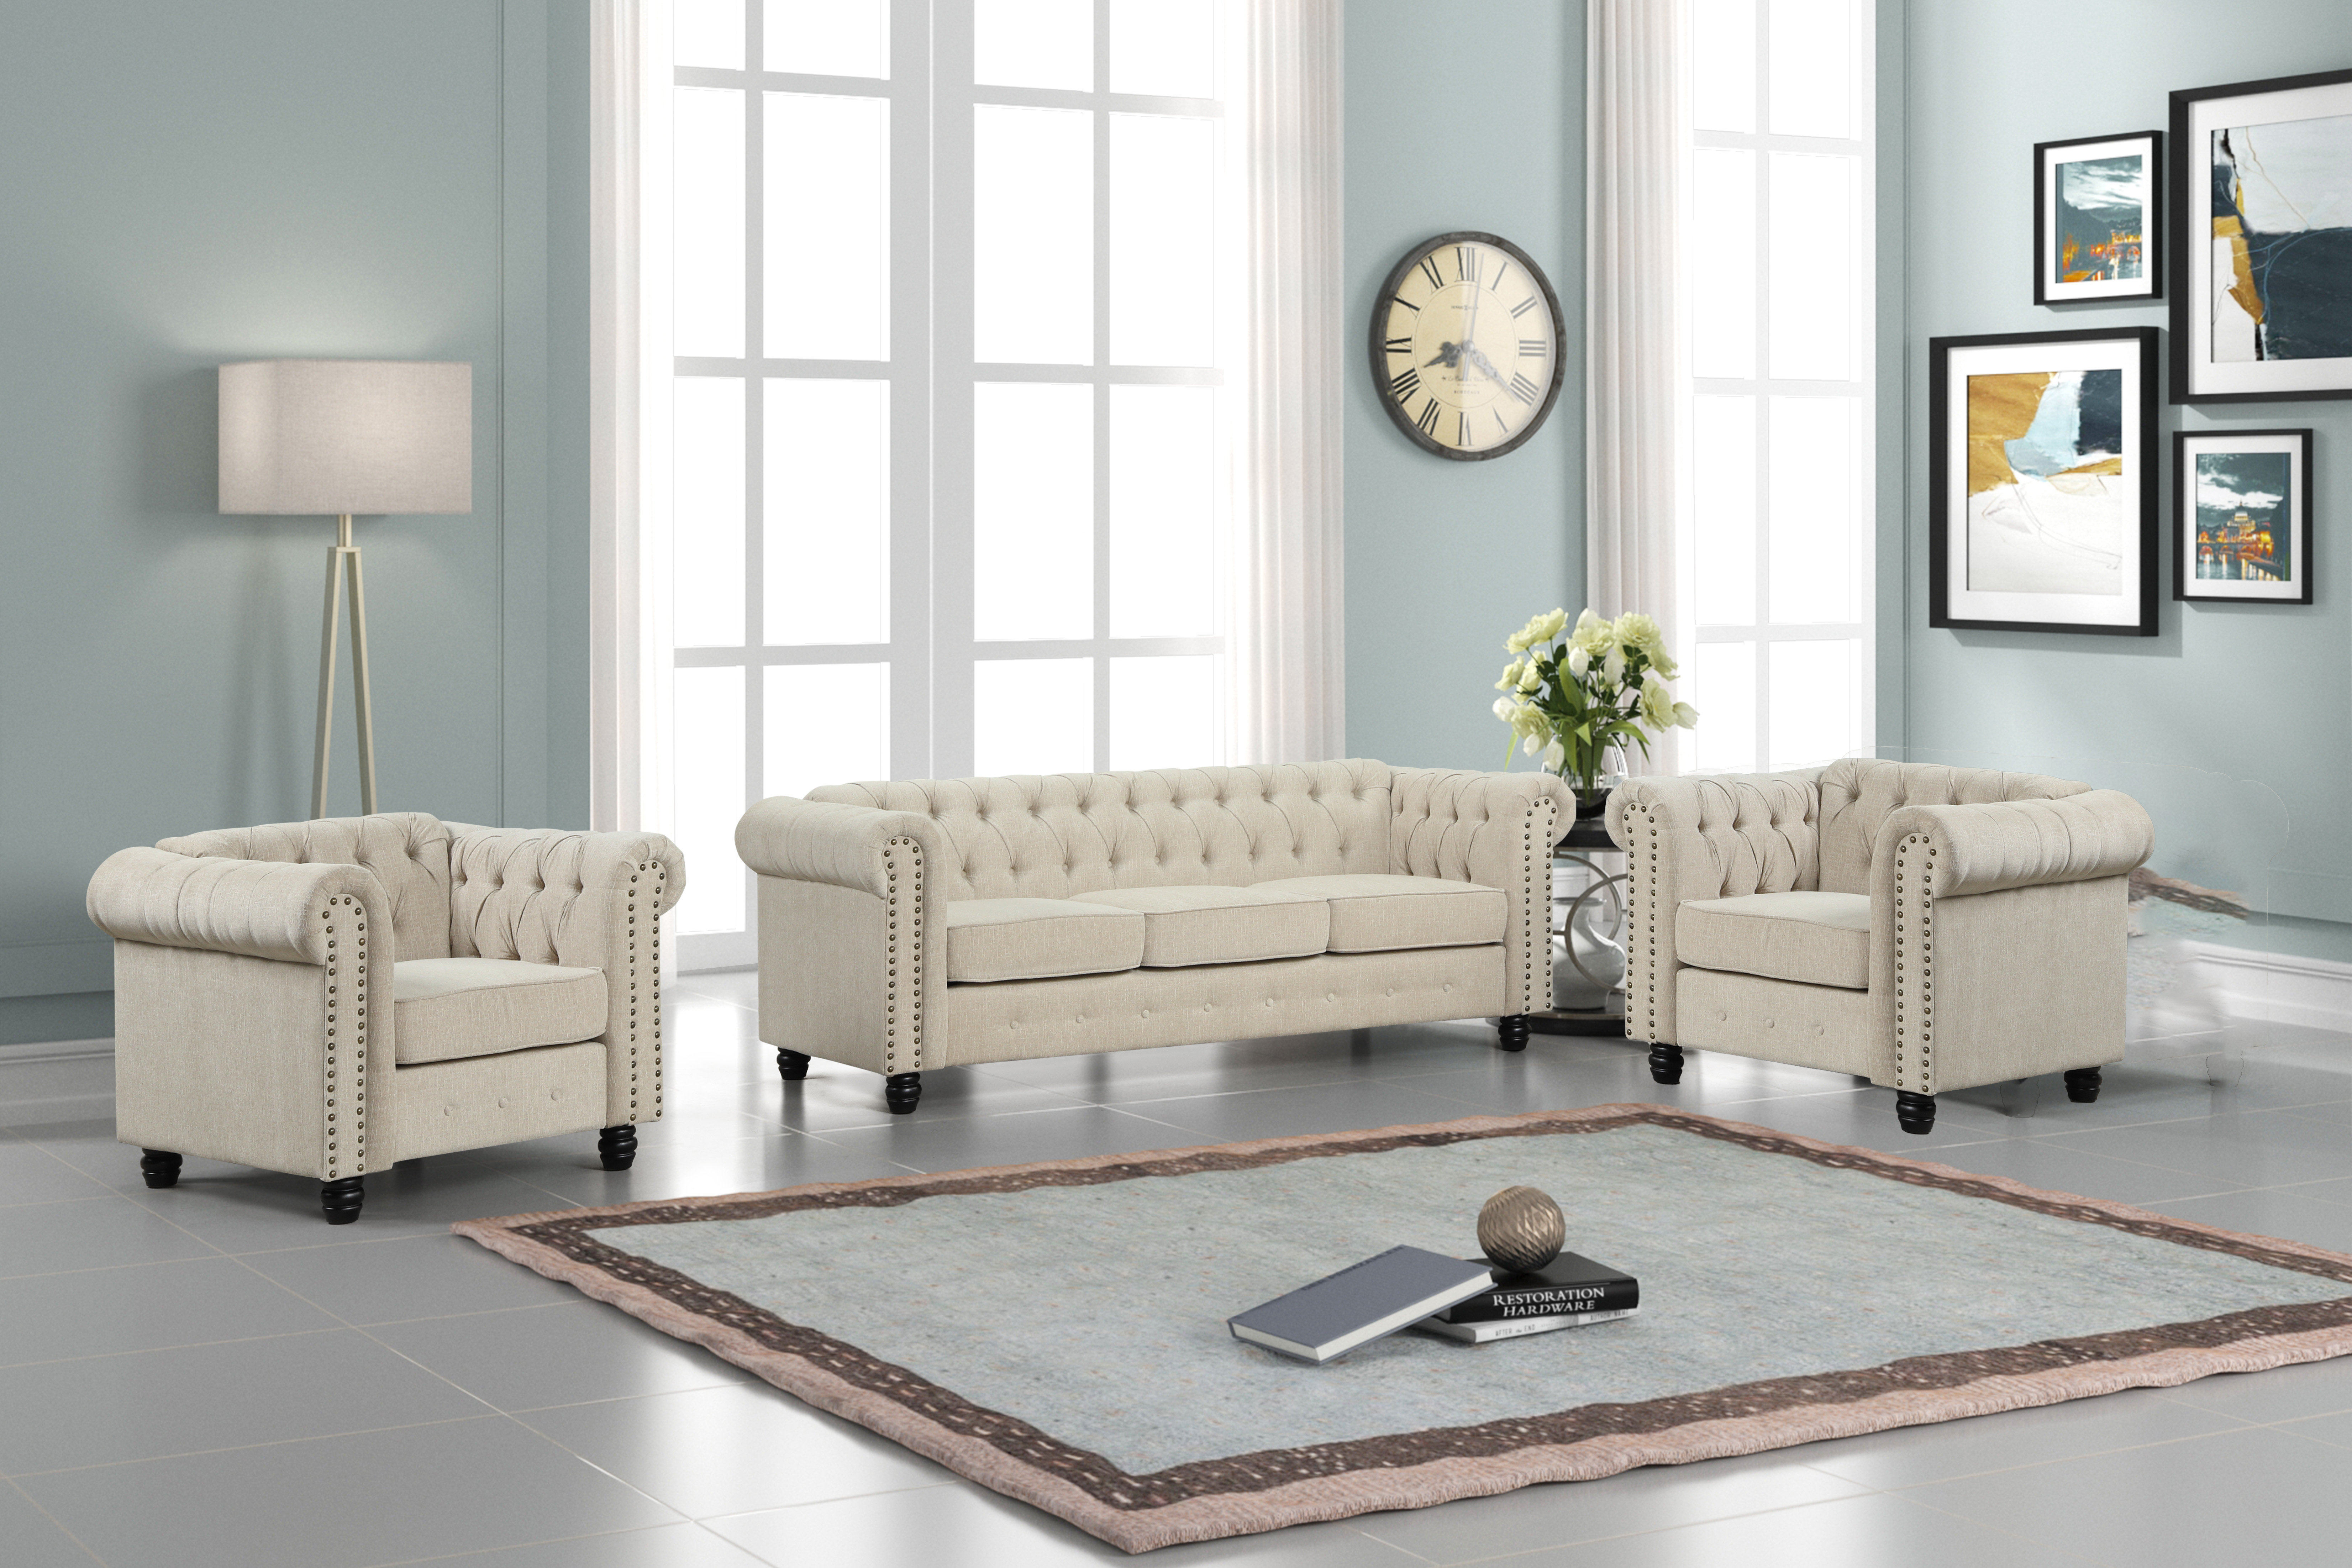 charlton home® chesterfield 3 - piece living room set | wayfair